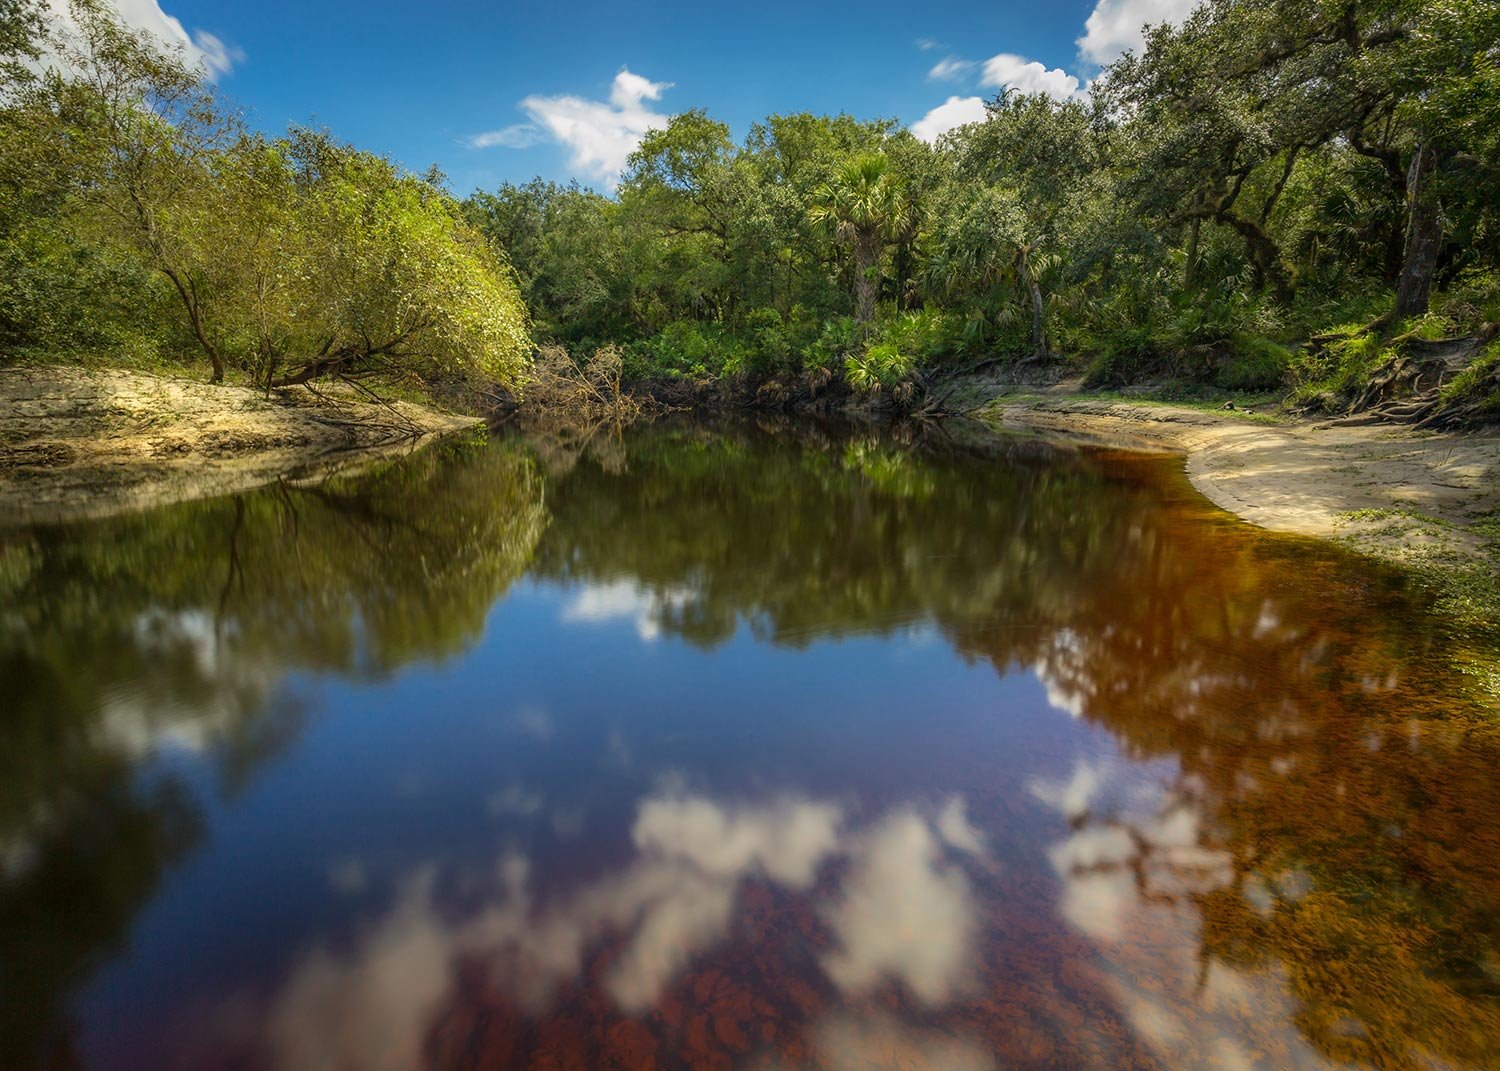  Econlockhatchee river, FL 